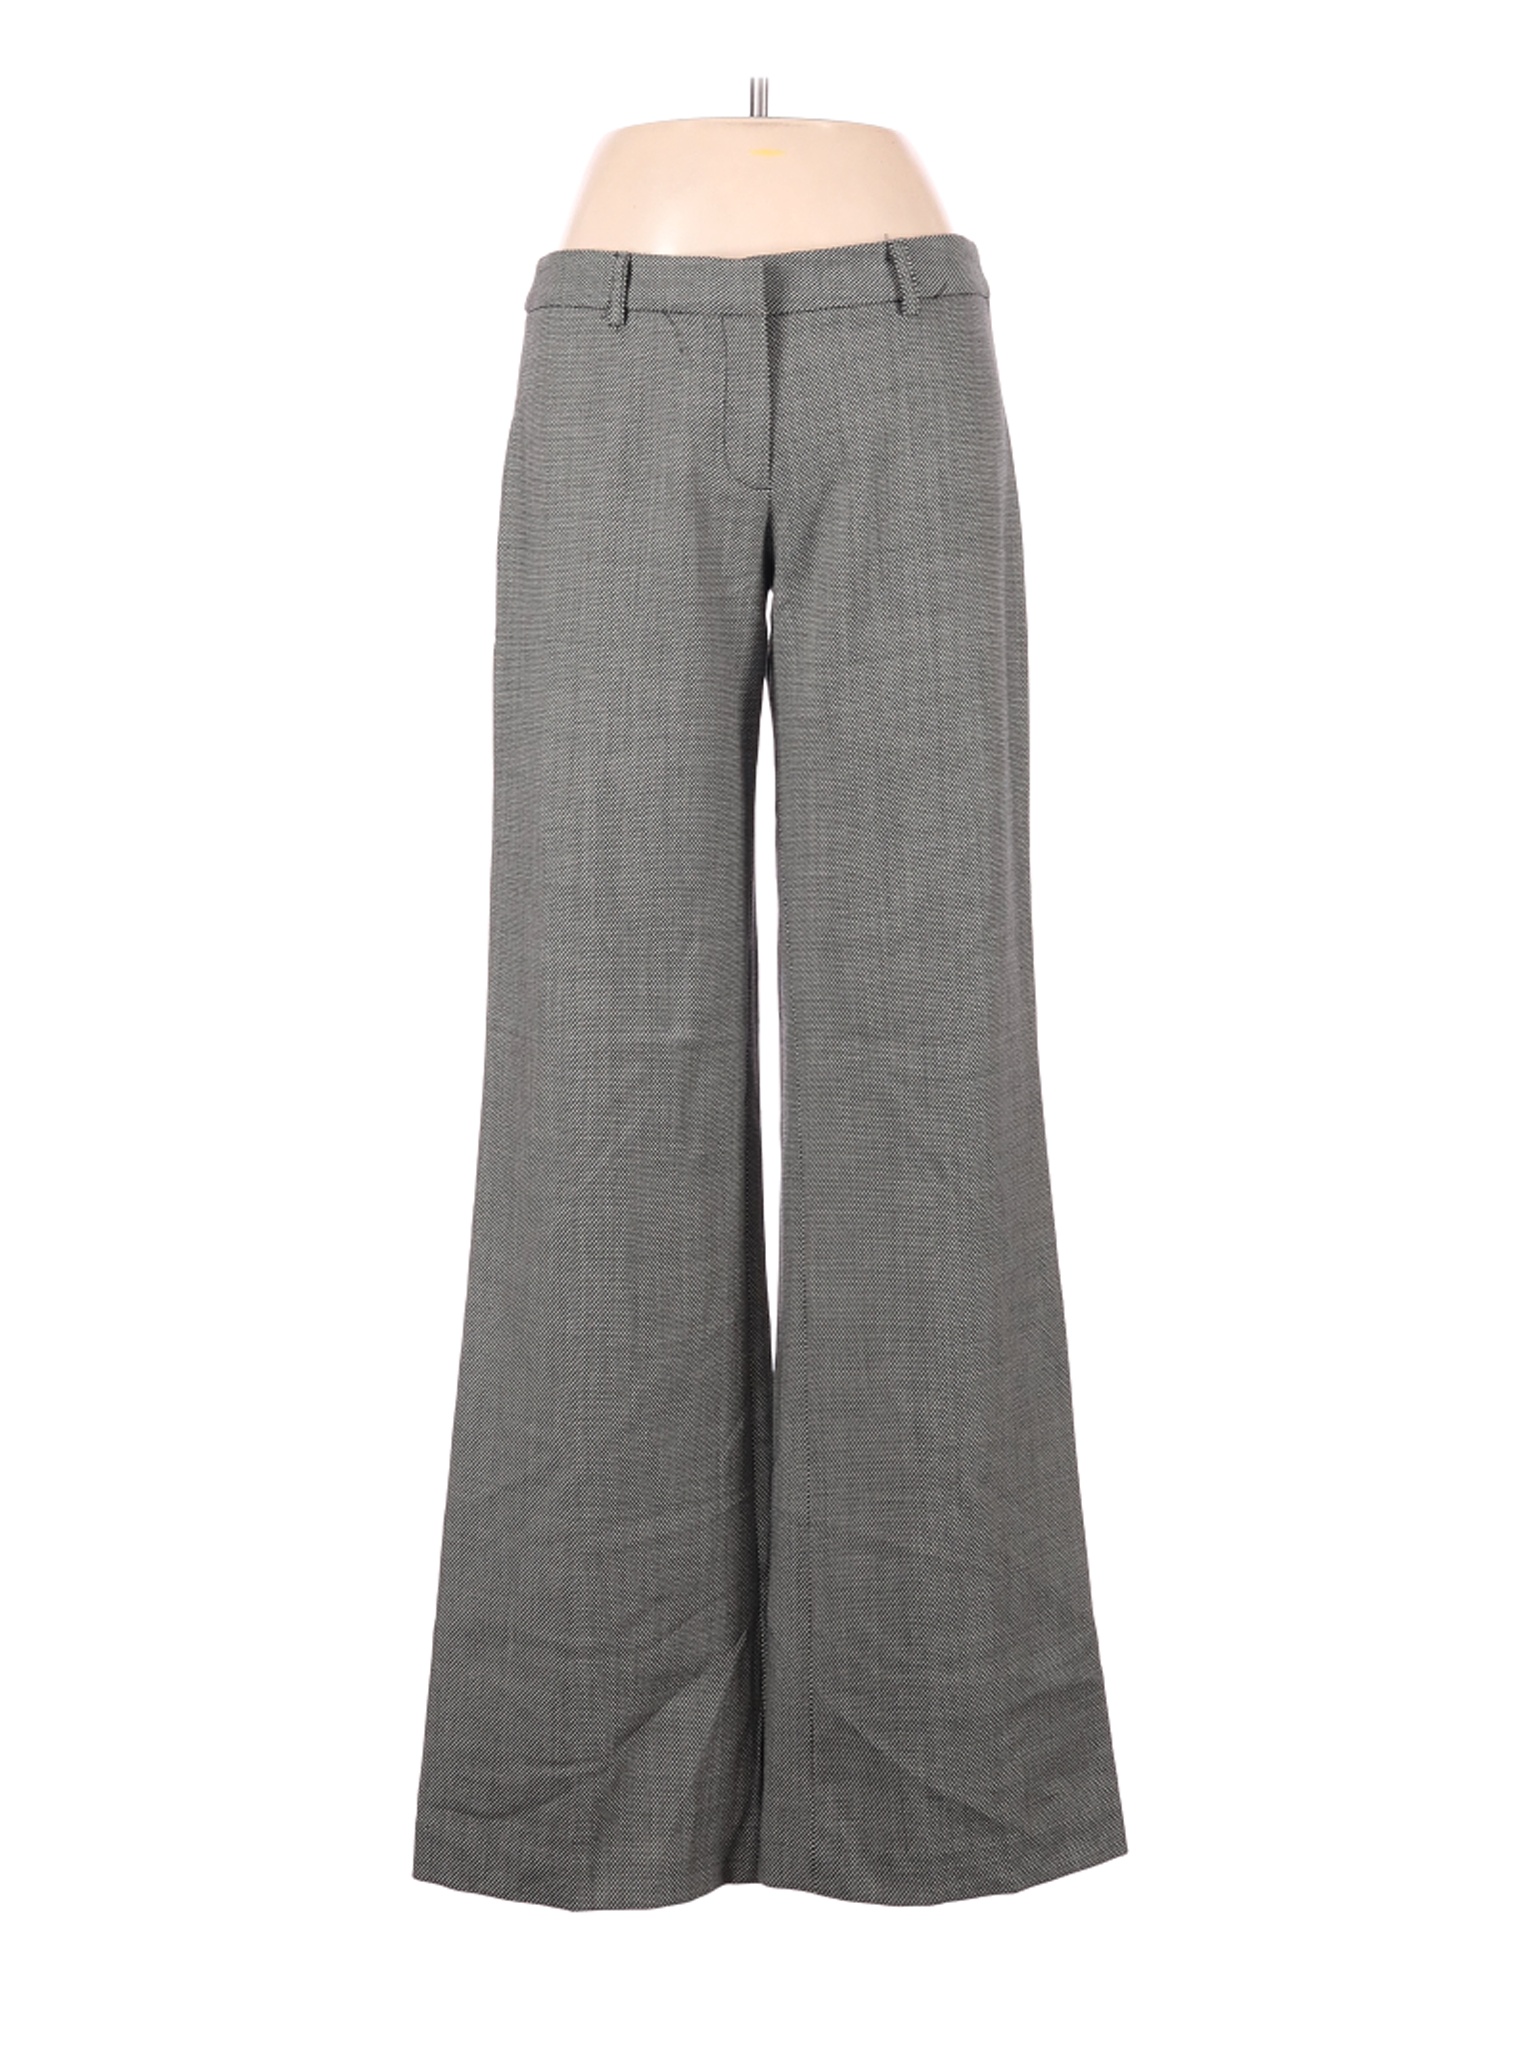 An original MILLY of New York Women Gray Dress Pants 6 | eBay